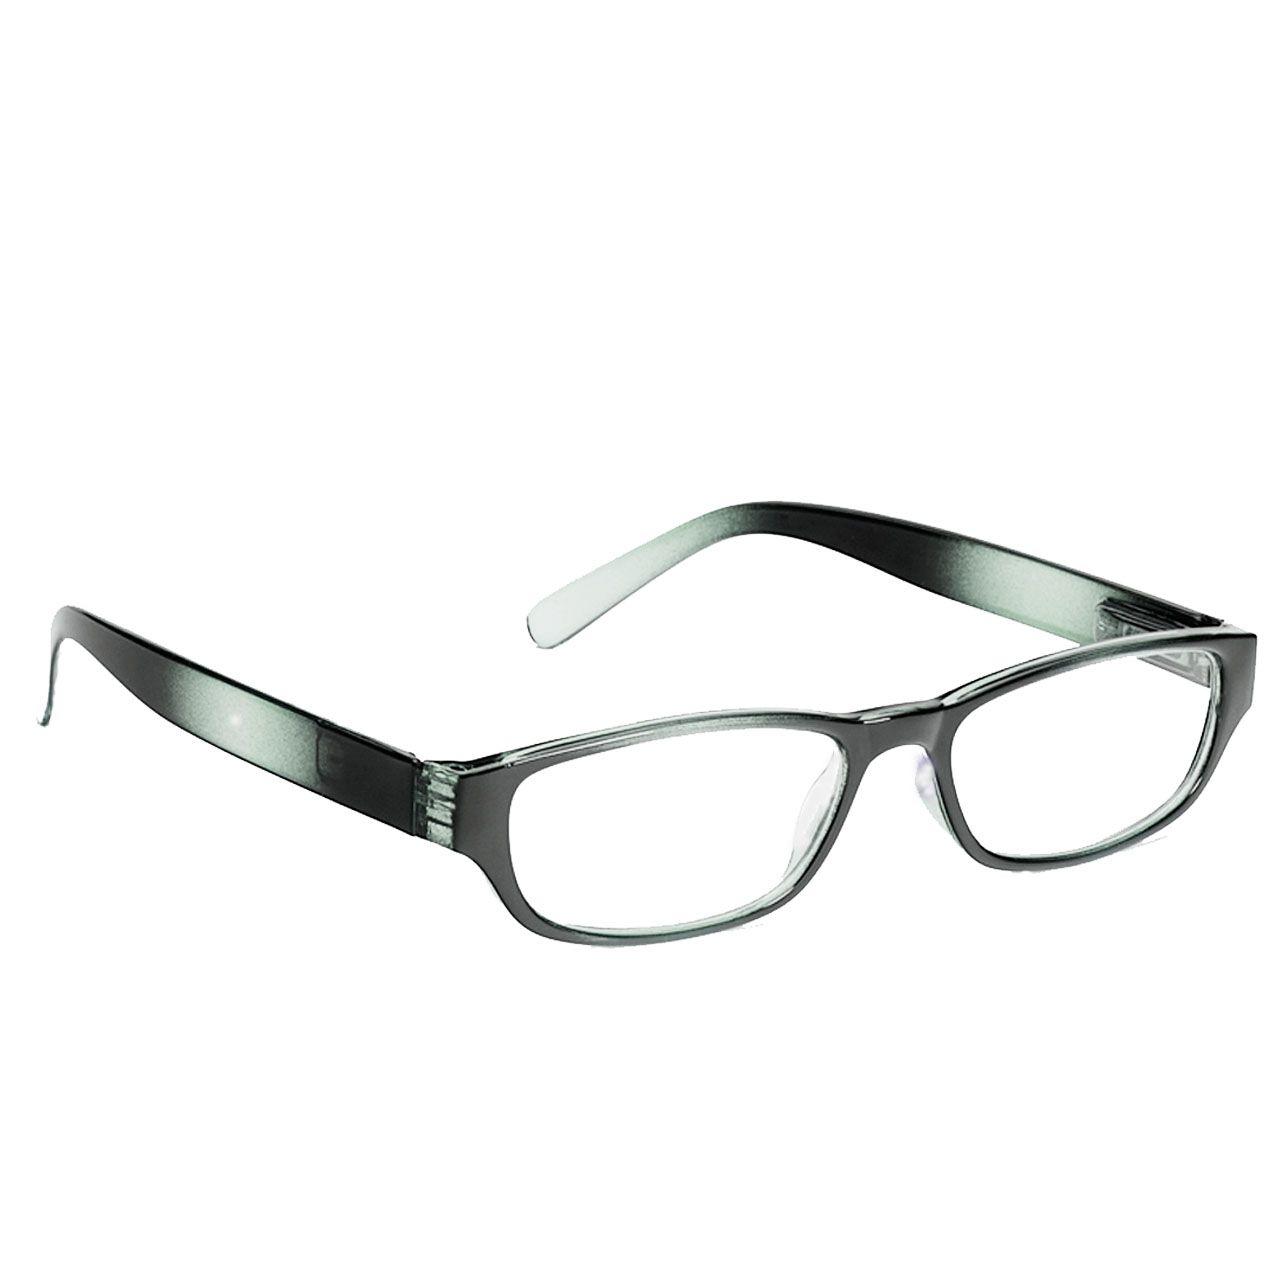 Reading glasses Sagebush Green-2